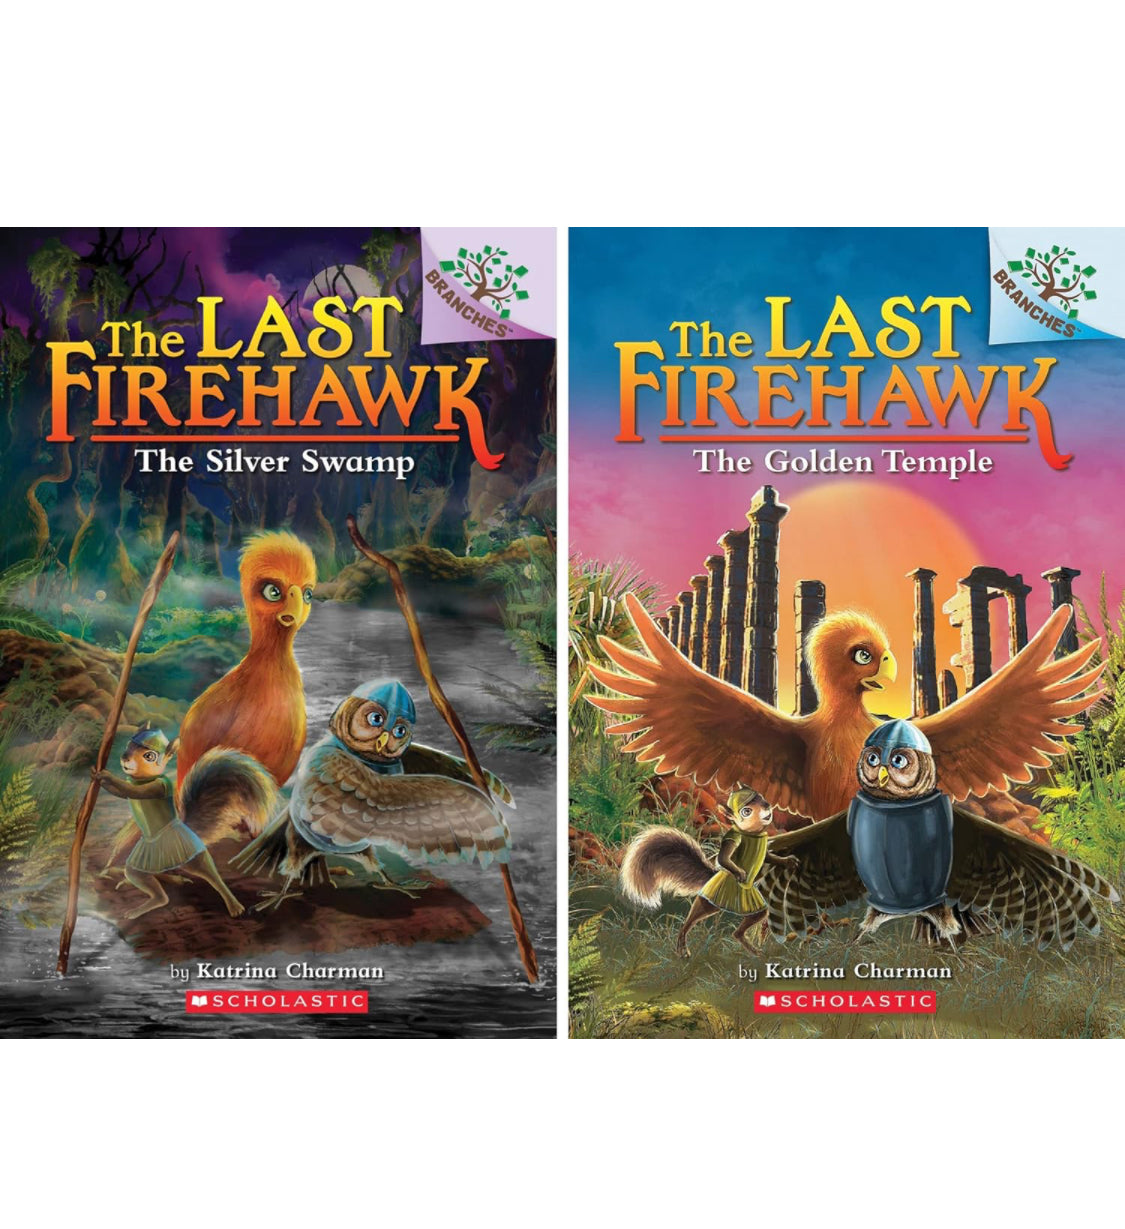 The Last Firehawk Complete Series Set (Books 1-11)